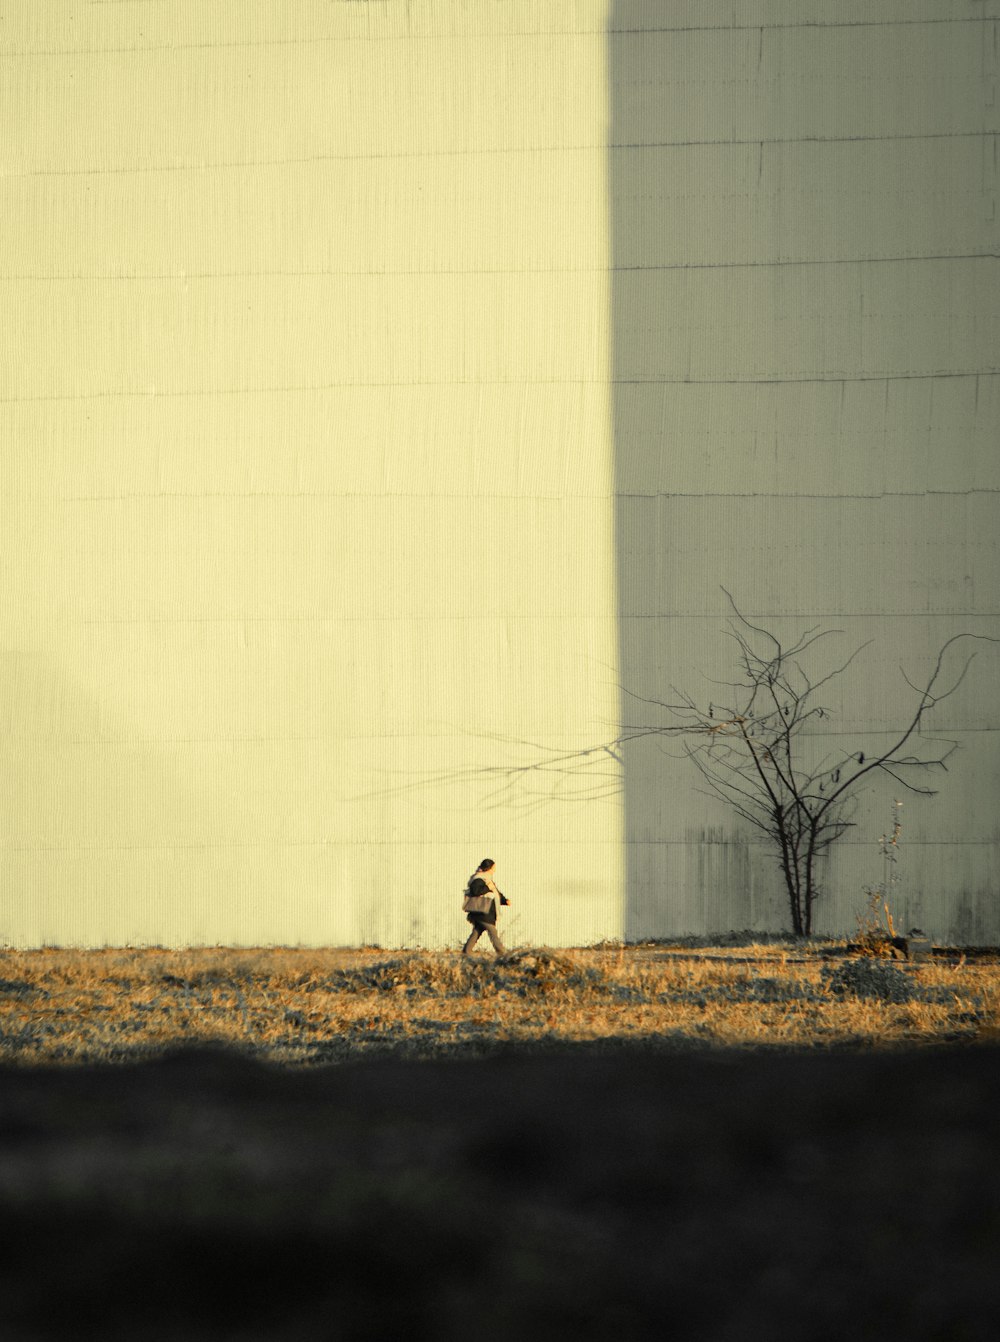 a person walking in a field near a building